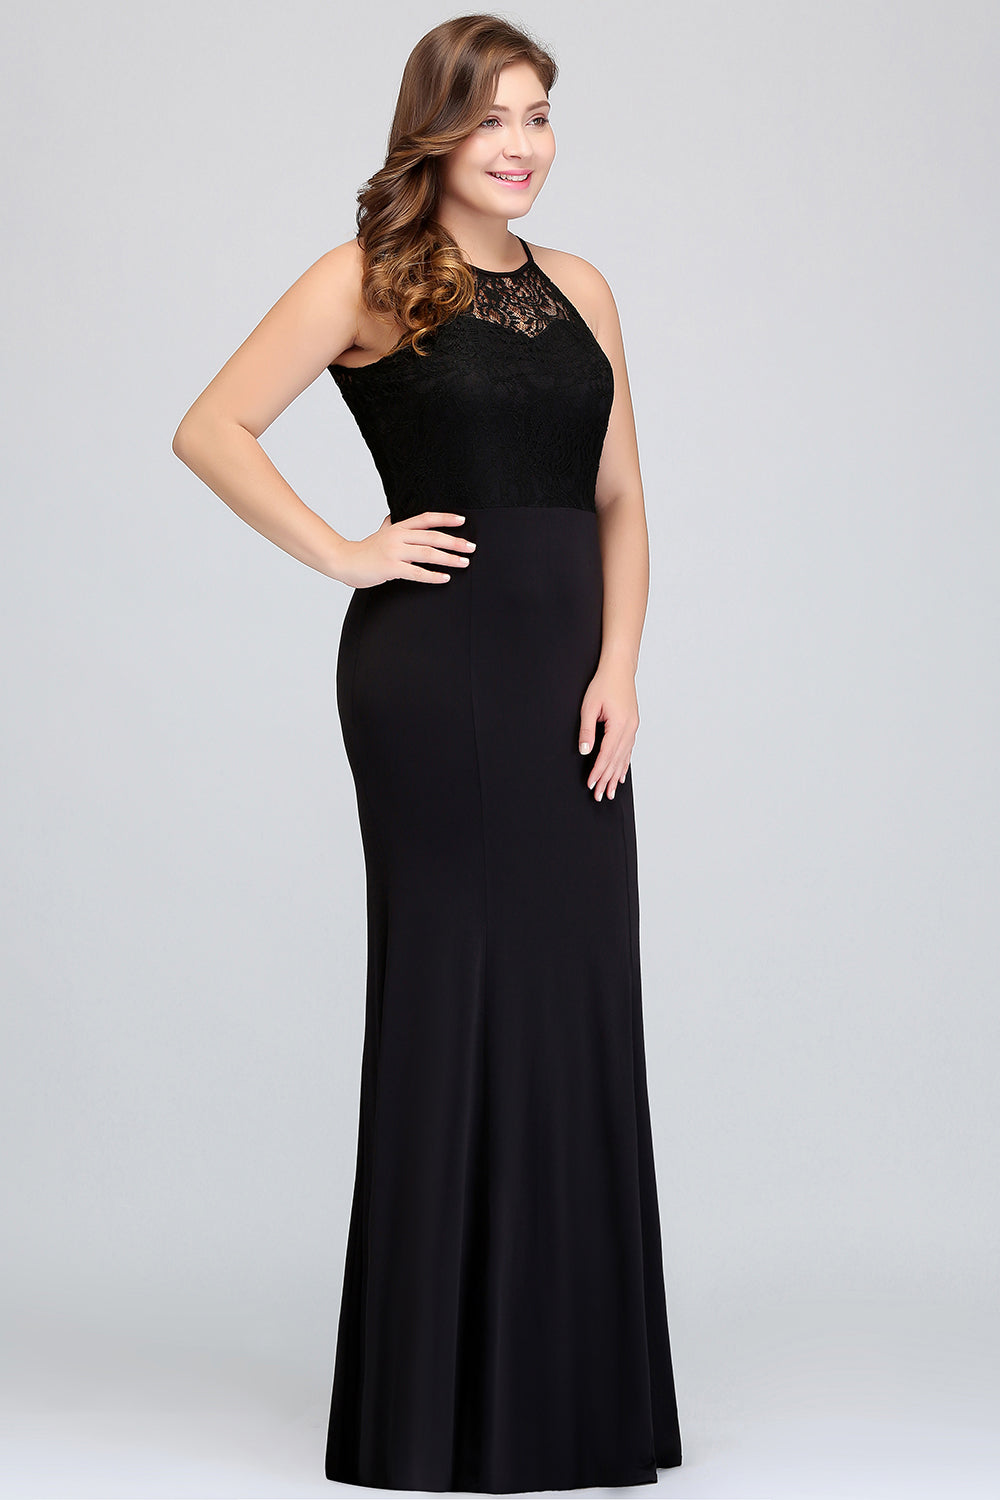 Plus Size Mermaid Jewel Lace Black Bridesmaid Dress Online